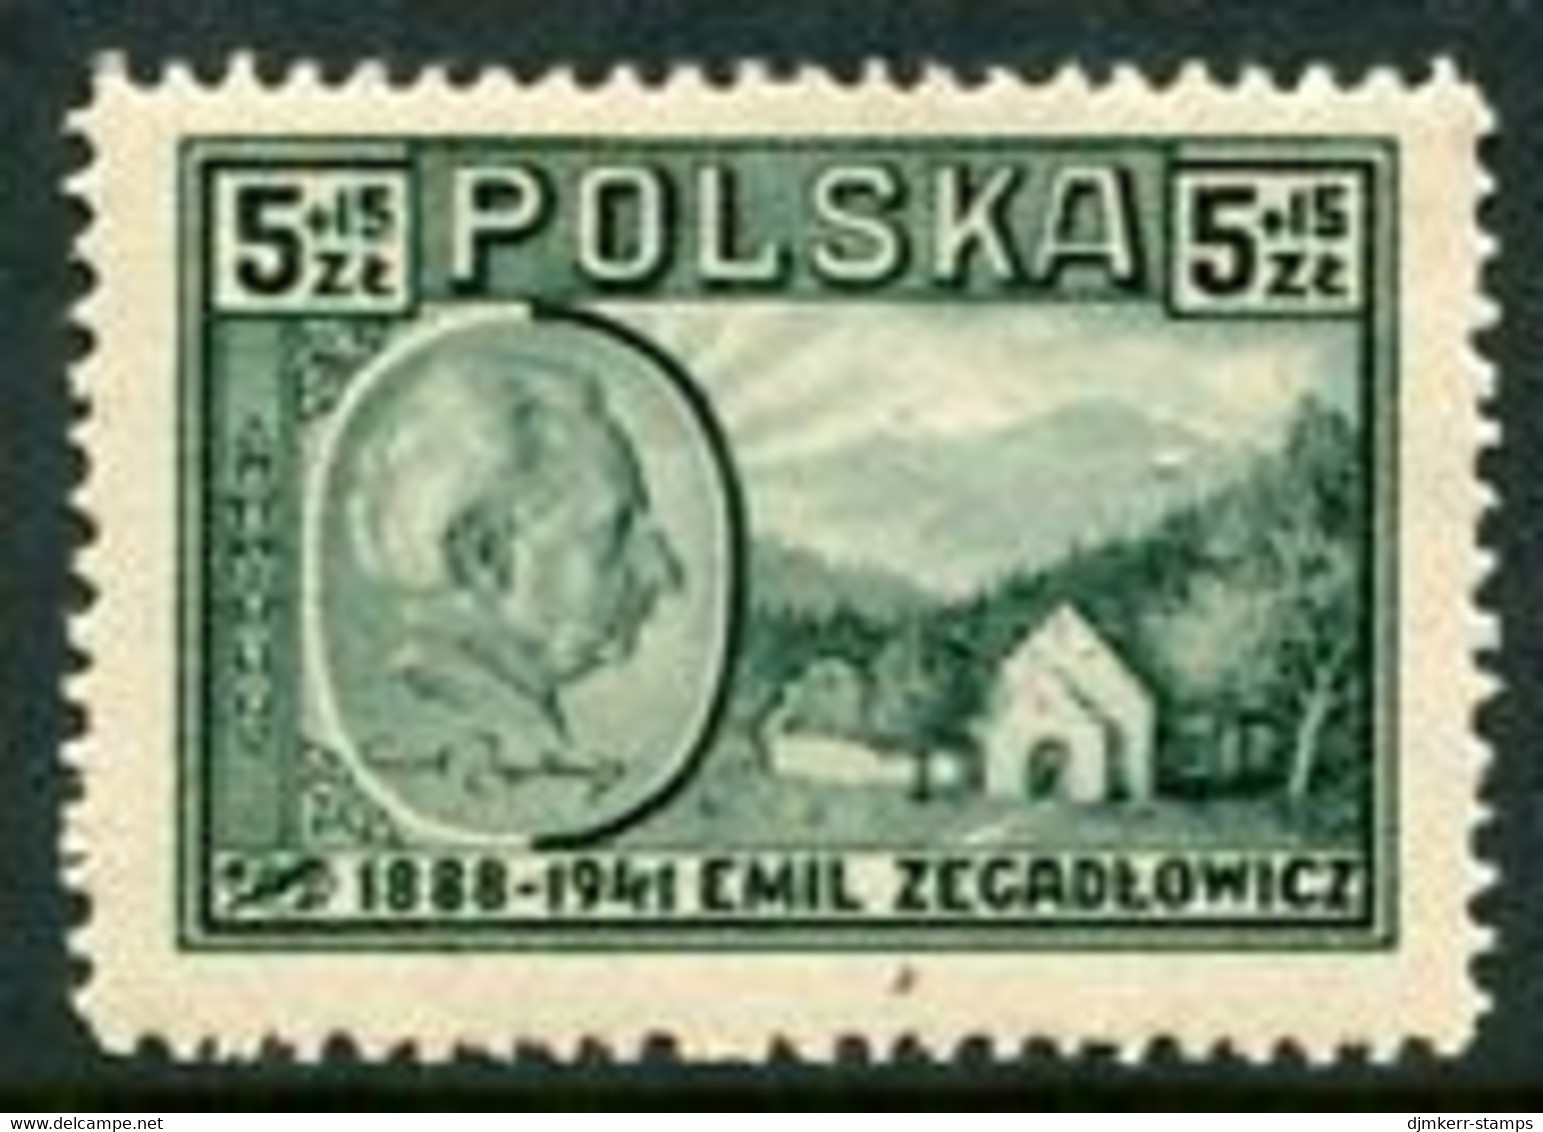 POLAND 1947 Zegadlowicz LHM / *.  Michel 453 - Nuevos